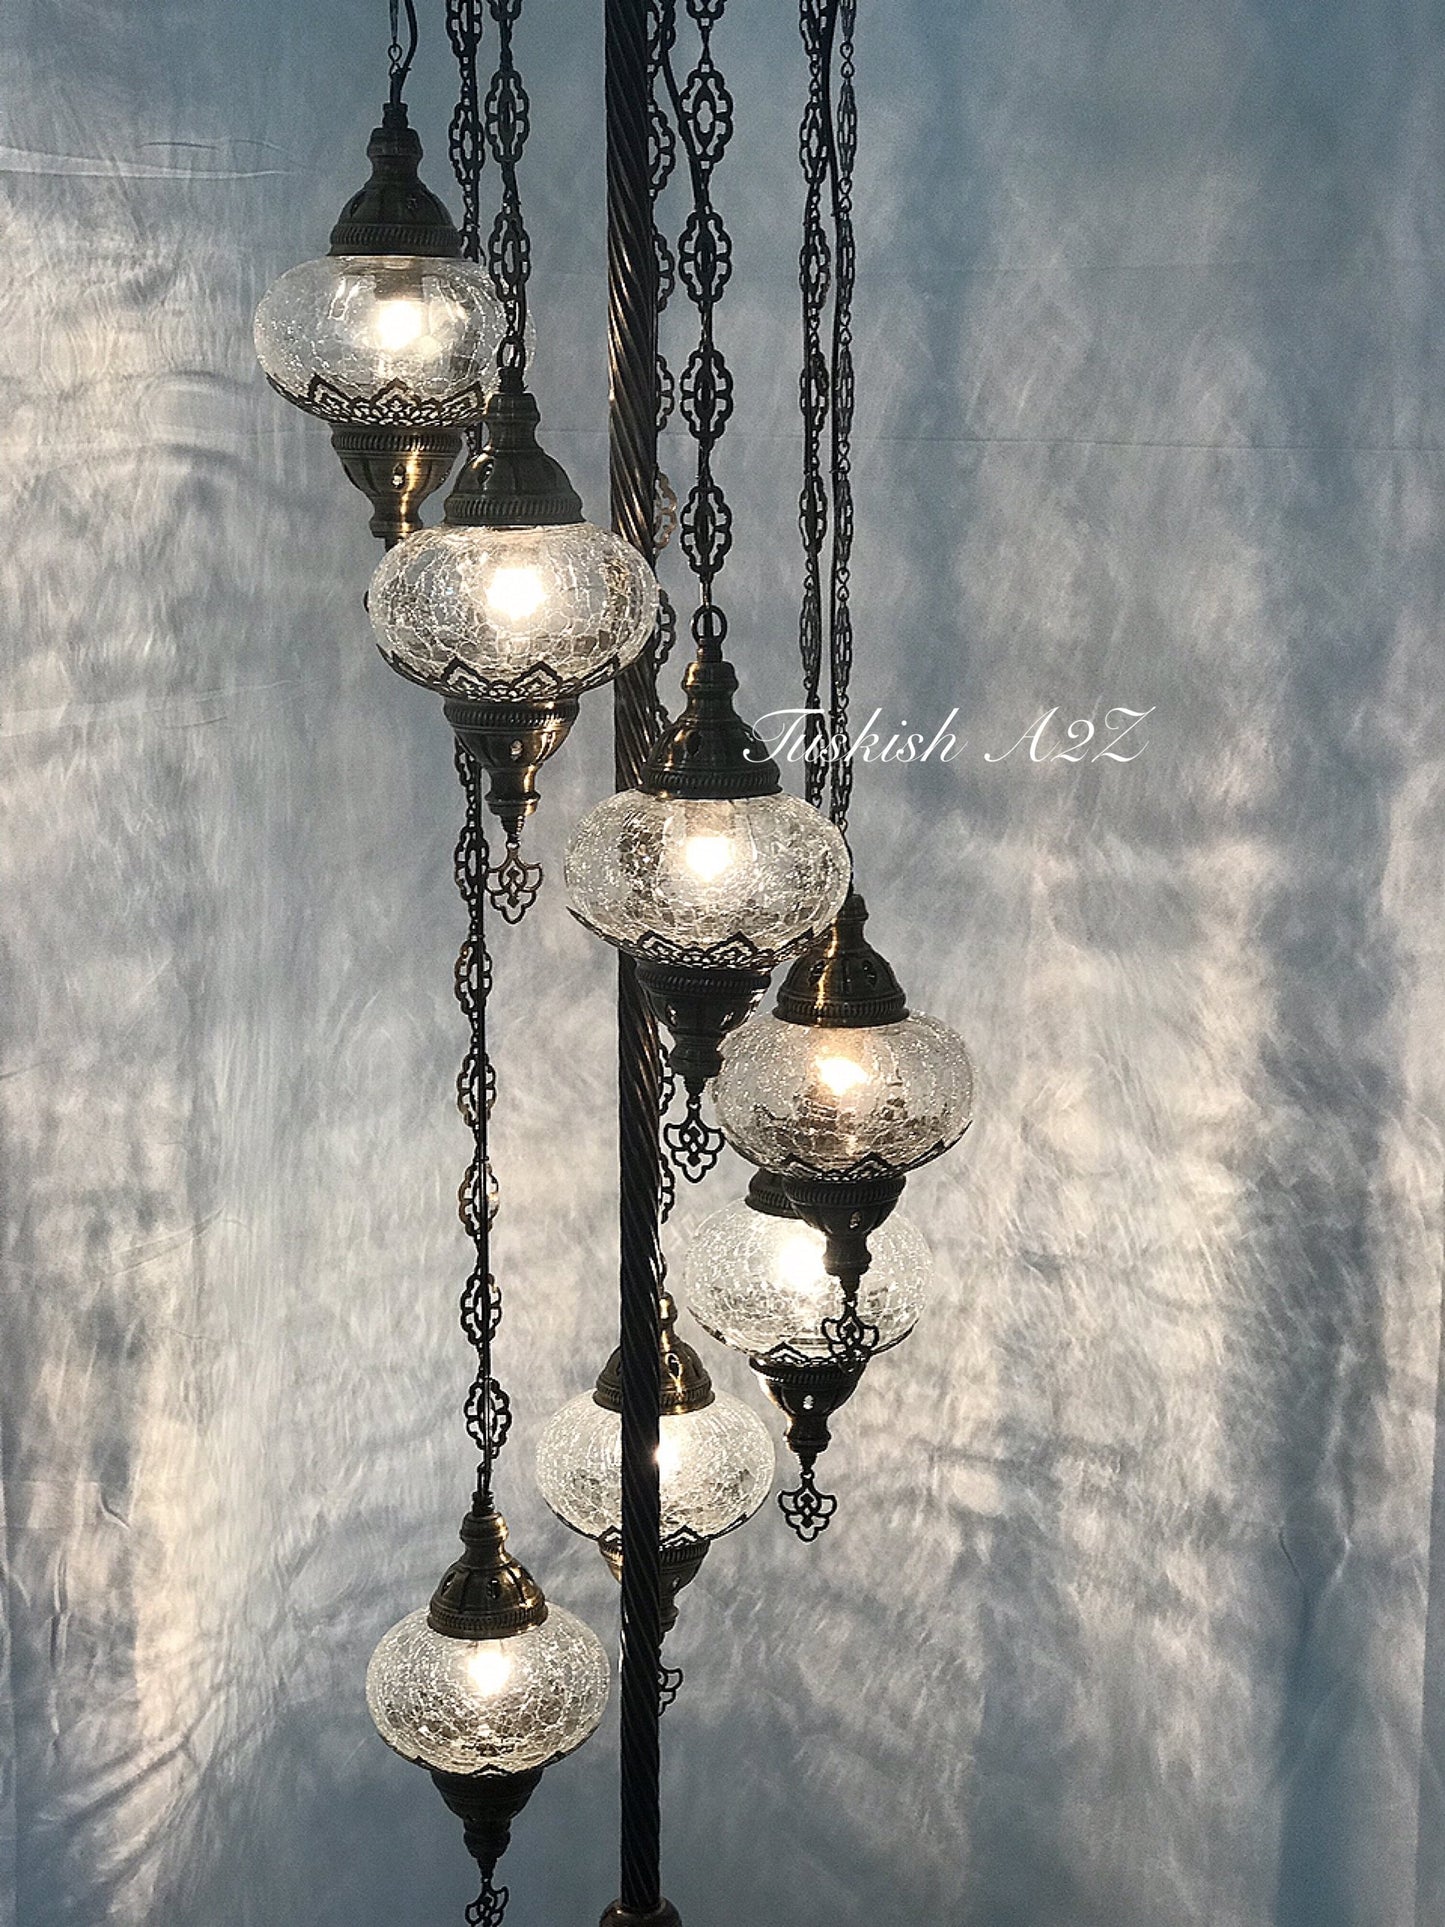 Ottoman TURKISH MOSAIC FLOOR LAMP with 7 Cracked GLOBES,ID:151